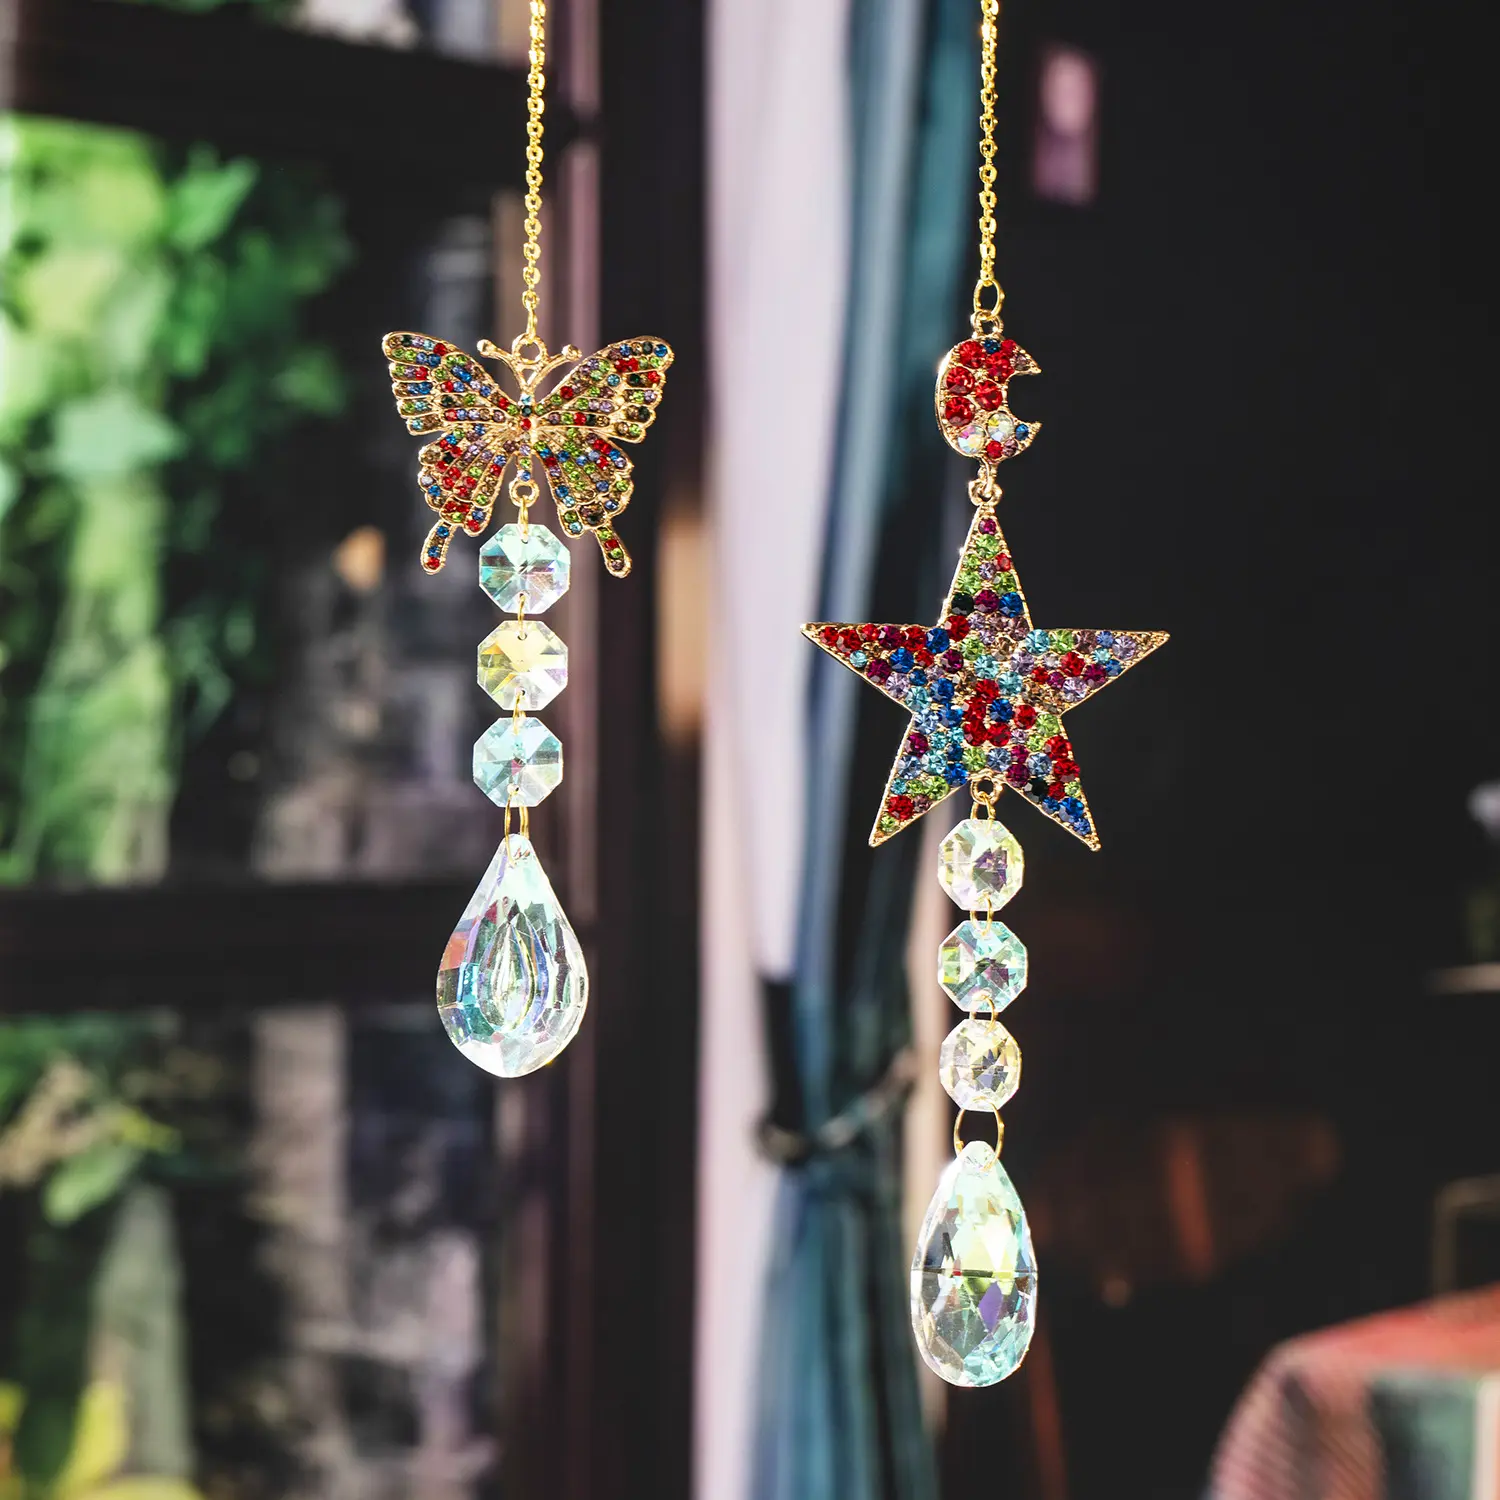 Honor Of Crysal liontin indah kelas atas dan minimalis berlian berwarna dekorasi berkebun liontin penangkap kristal